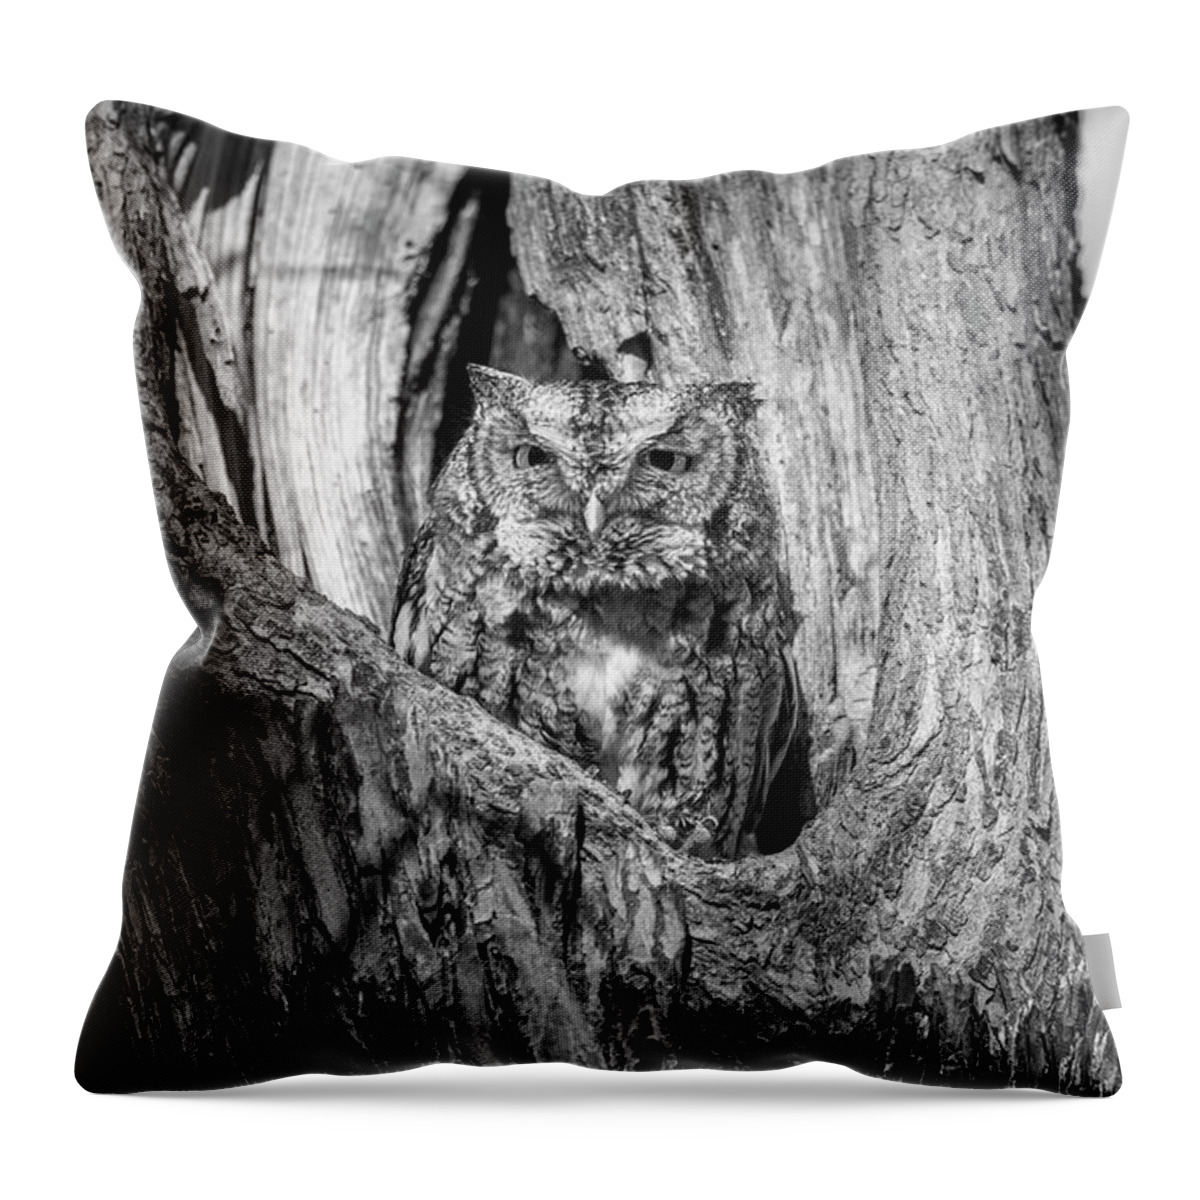 Eastern Screech Owl Throw Pillow featuring the photograph Eastern Screech owl by Puttaswamy Ravishankar